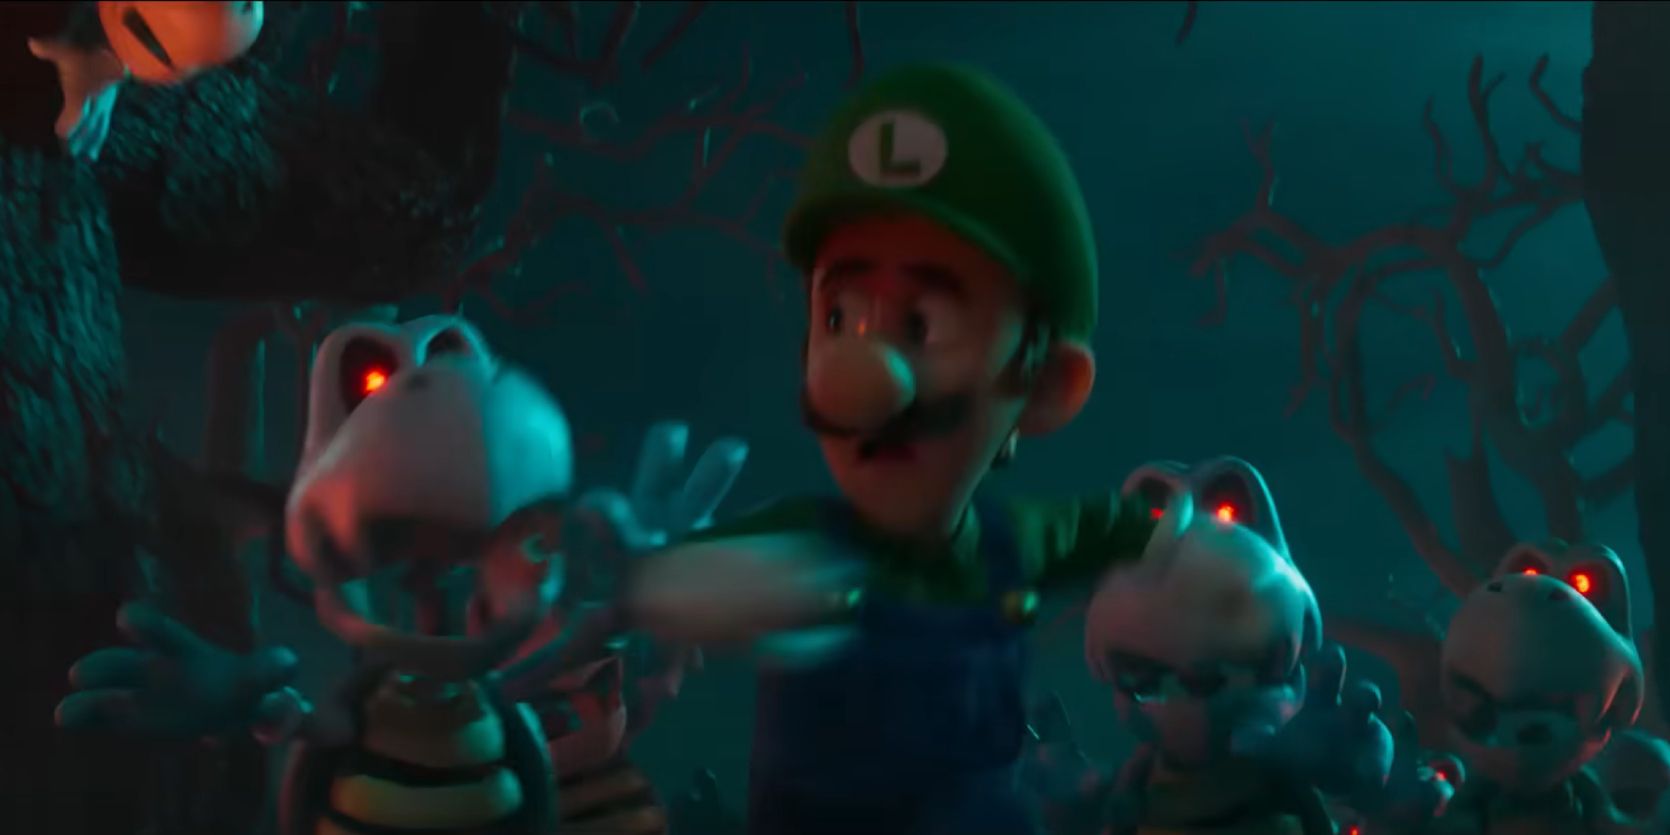 Why Is Luigi So Scared In The Super Mario Bros Trailer?